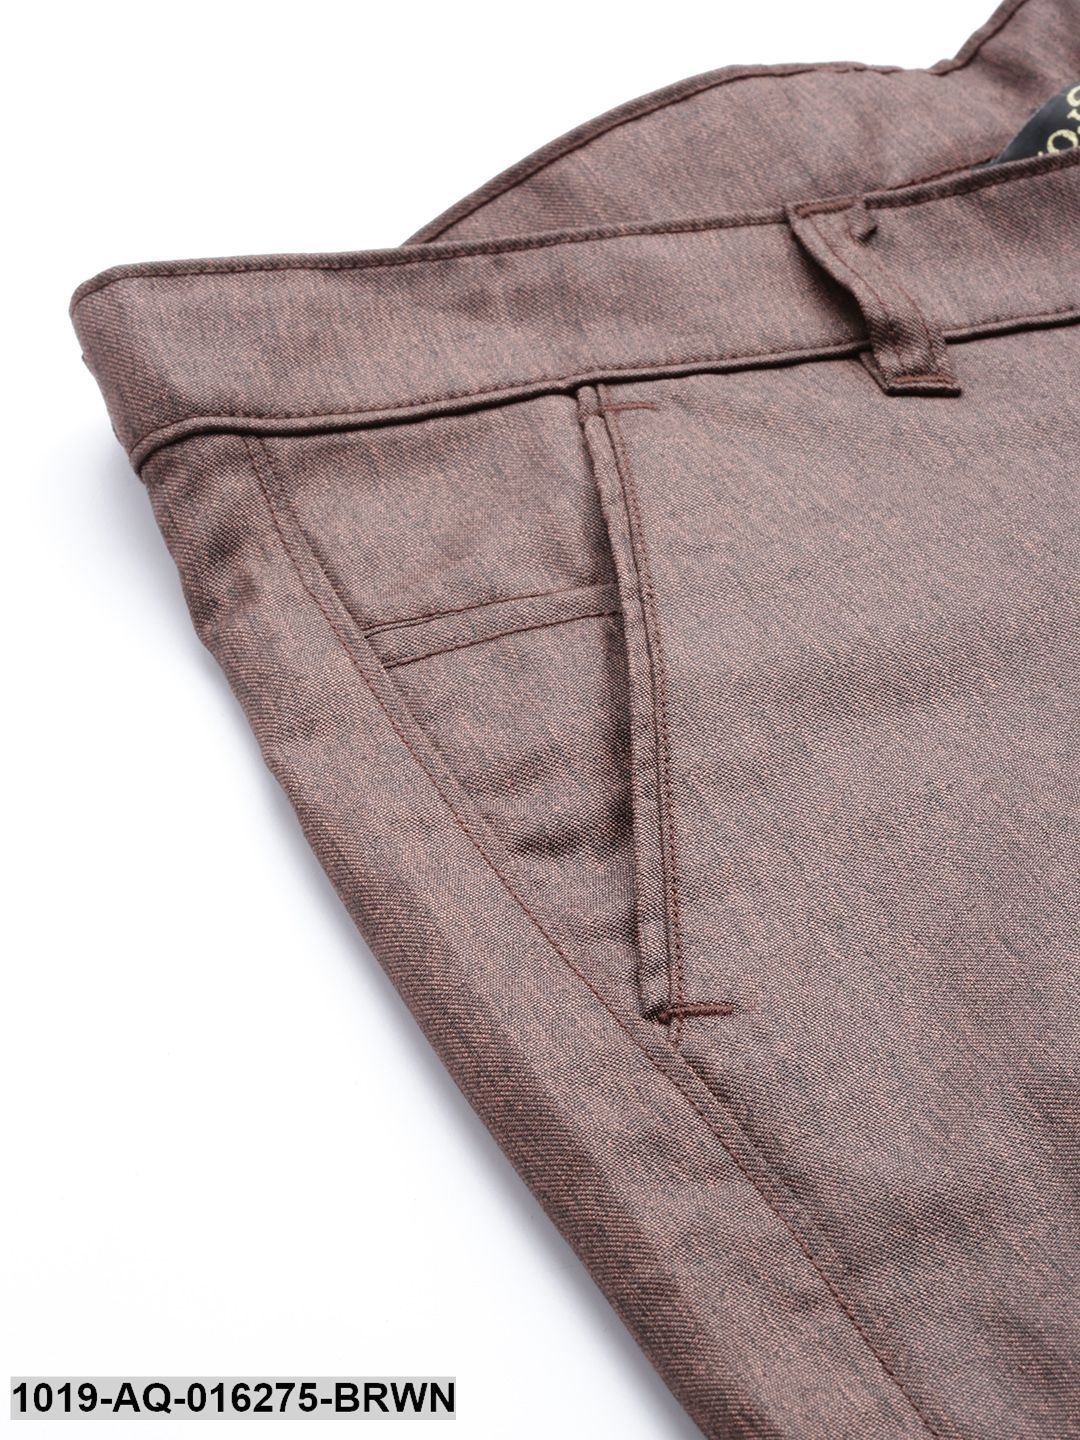 Men's Cotton Blend Brown Formal Trousers - Sojanya